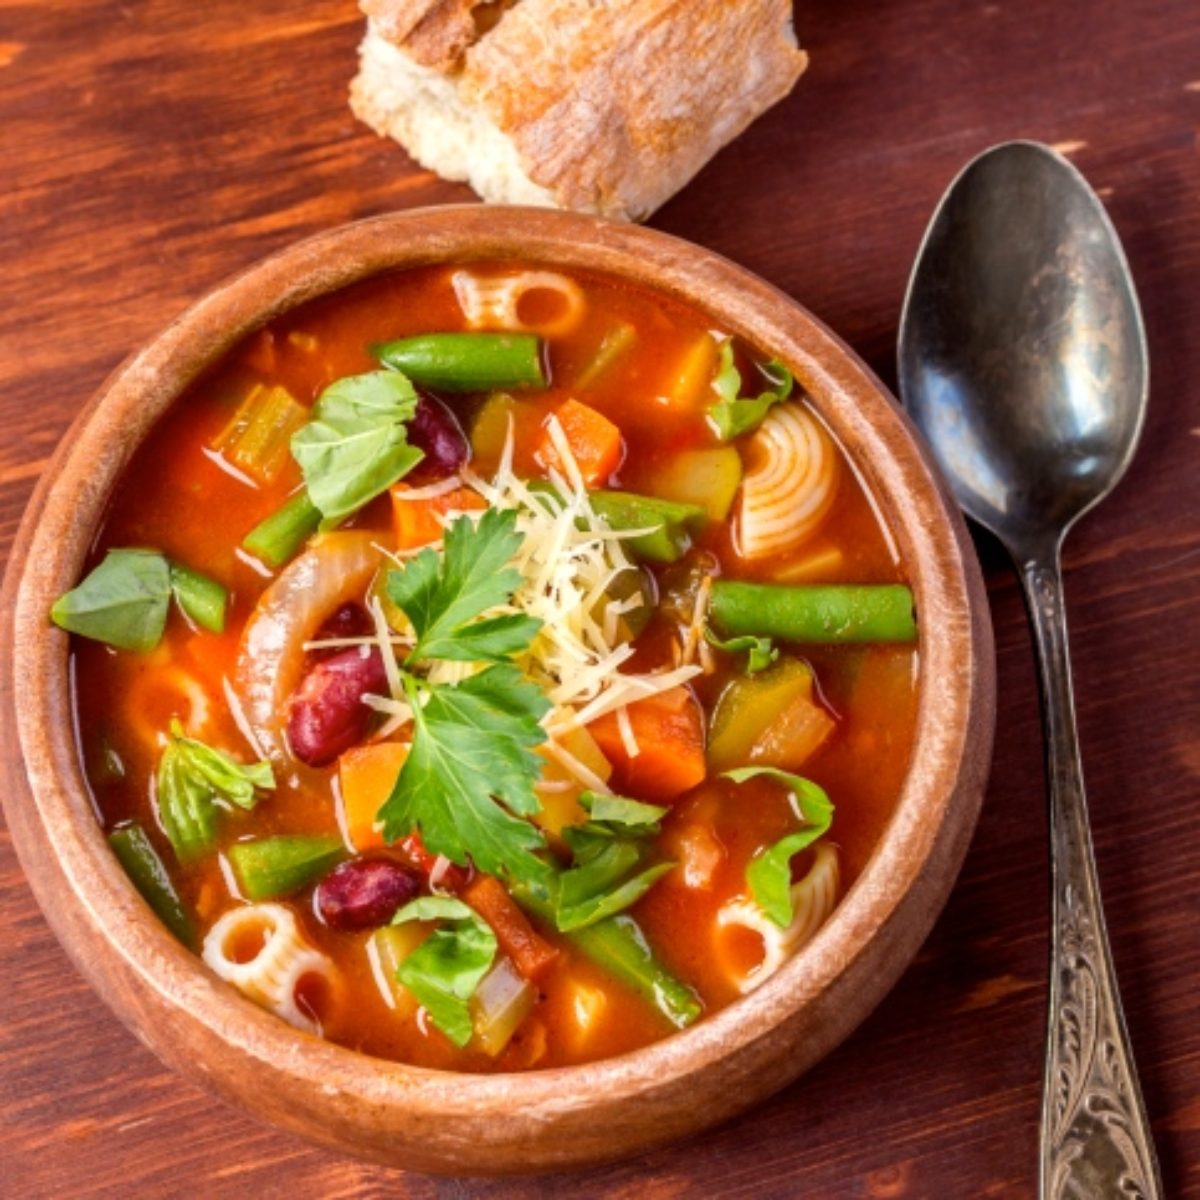 Sopa de Verduras “Minestrone” estilo Latino